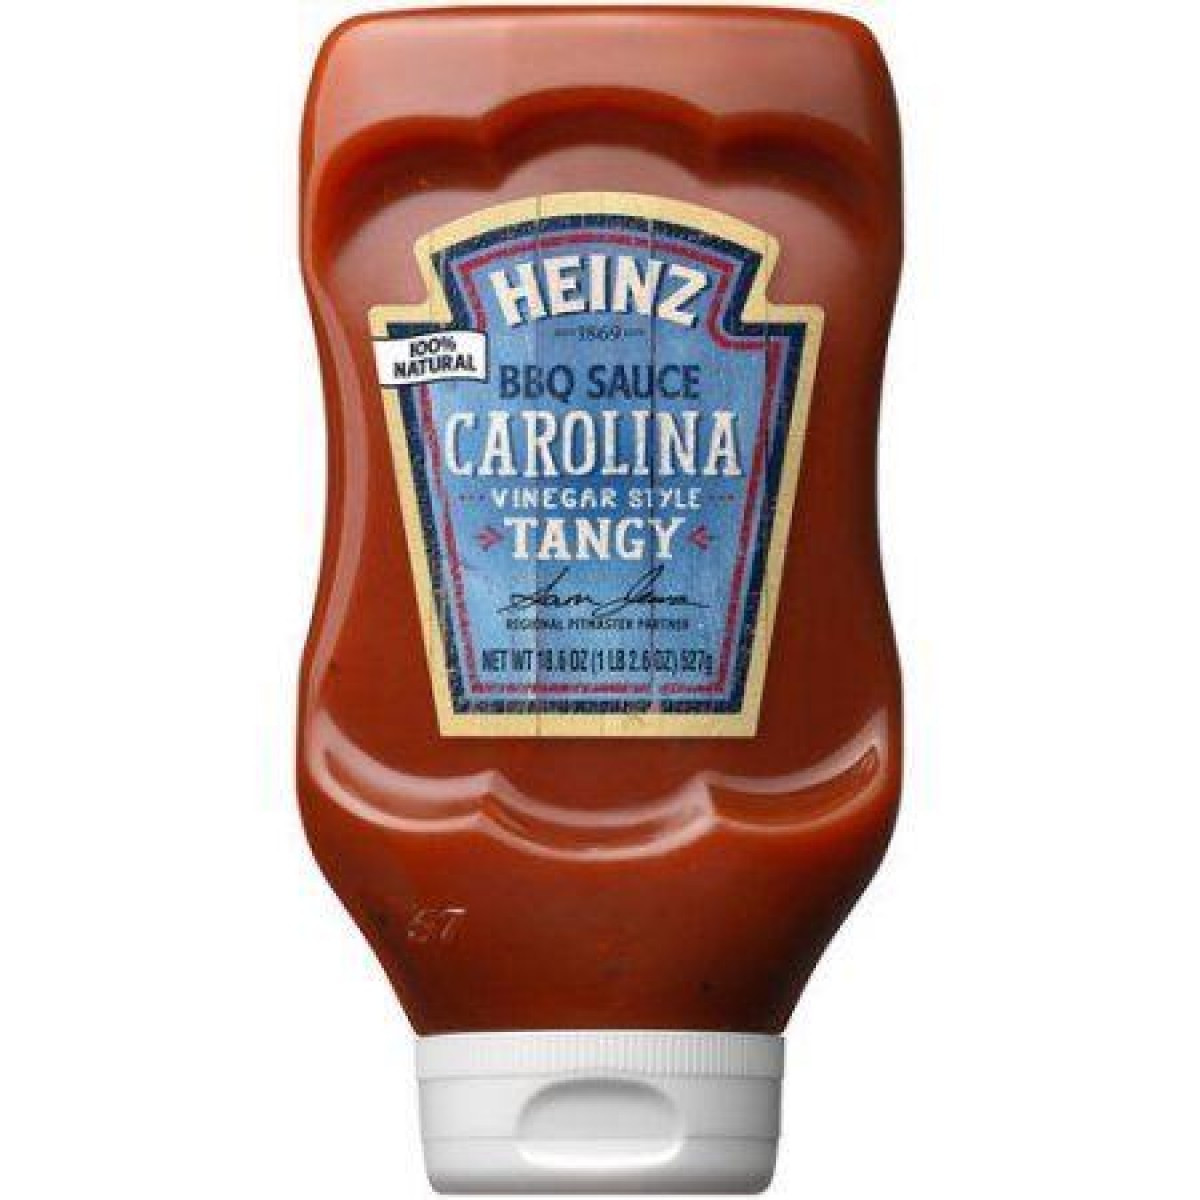 Heinz Carolina Bbq Sauce
 Heinz Carolina Tangy BBQ Sauce 527g 18 6oz